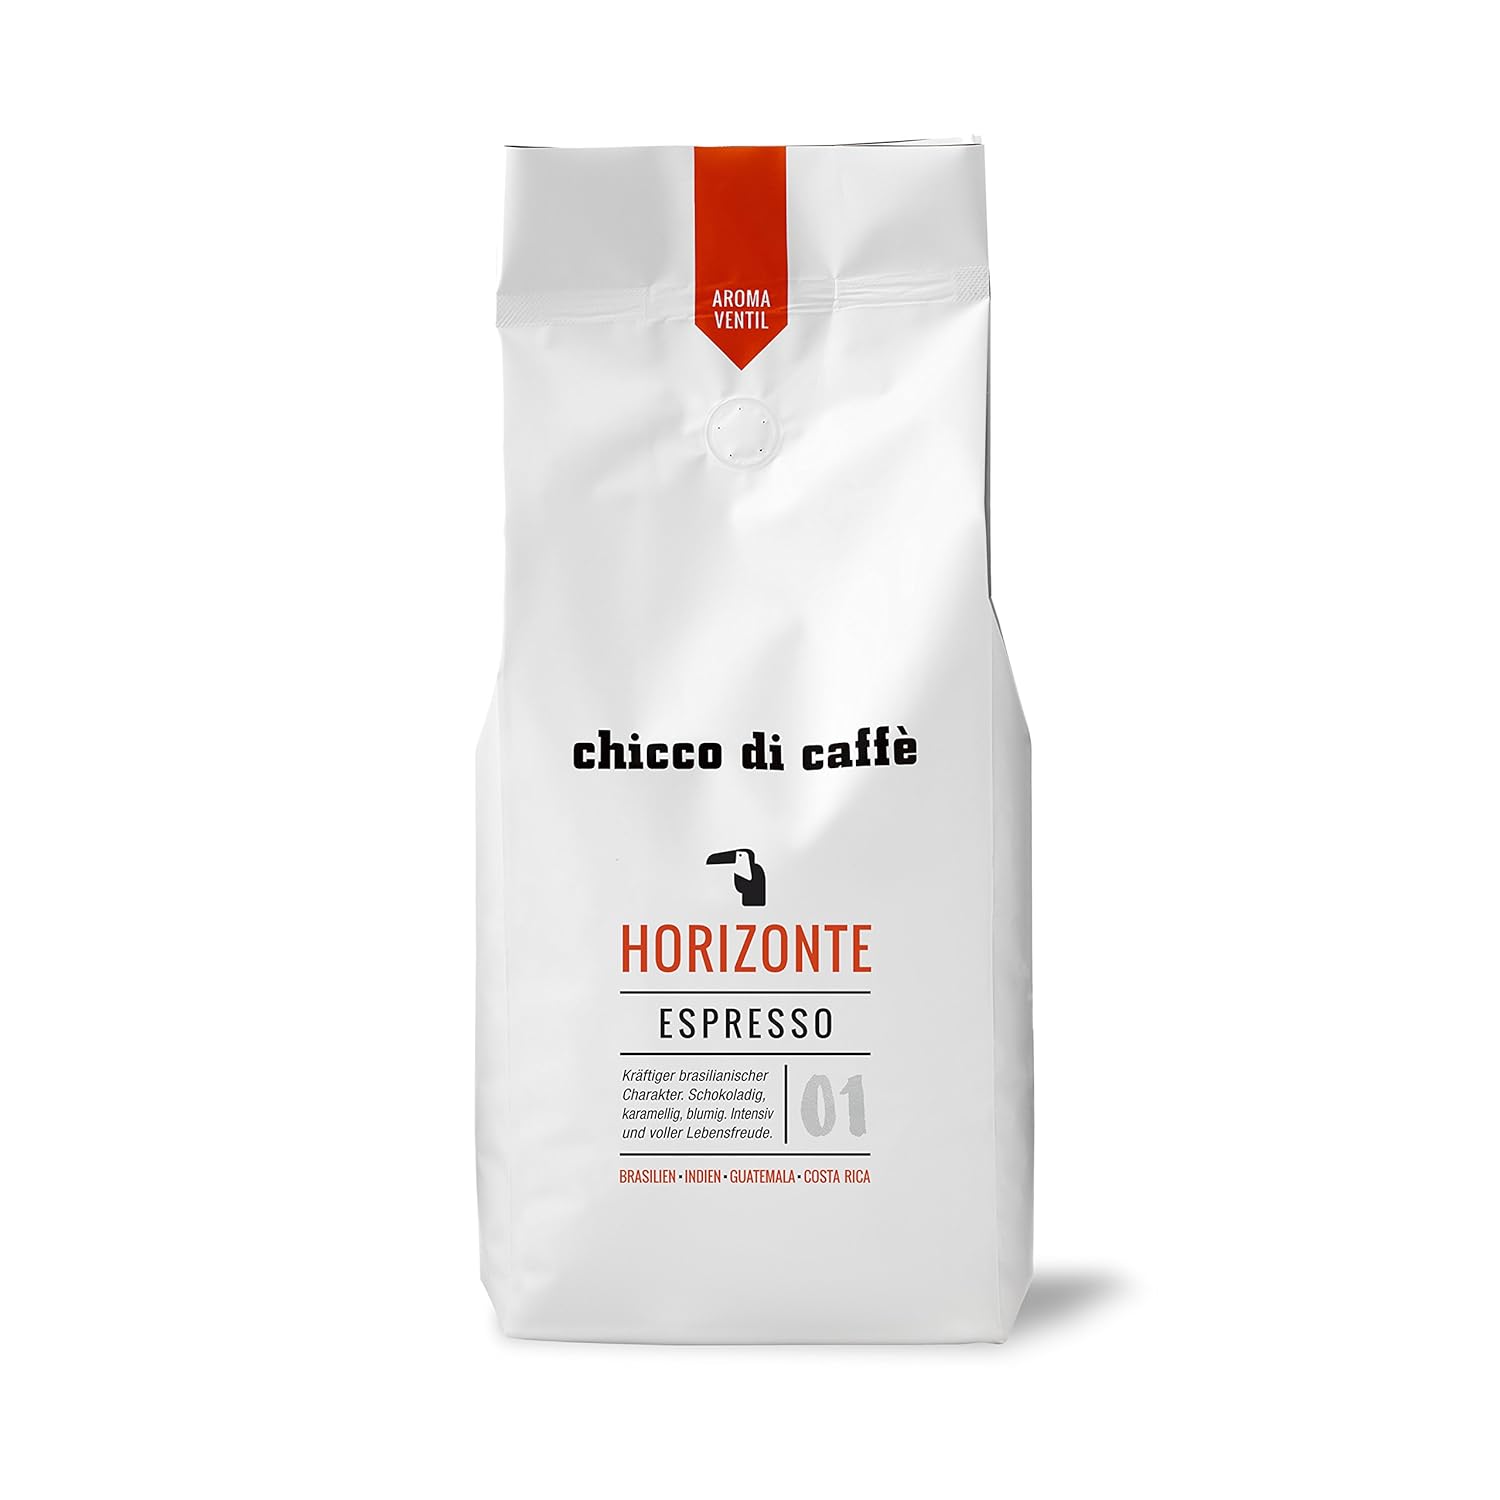 chicco di caffè I Espresso Horizonte I Whole Coffee Beans I 70% Arabica - 30% Robusta I Gently Roasted